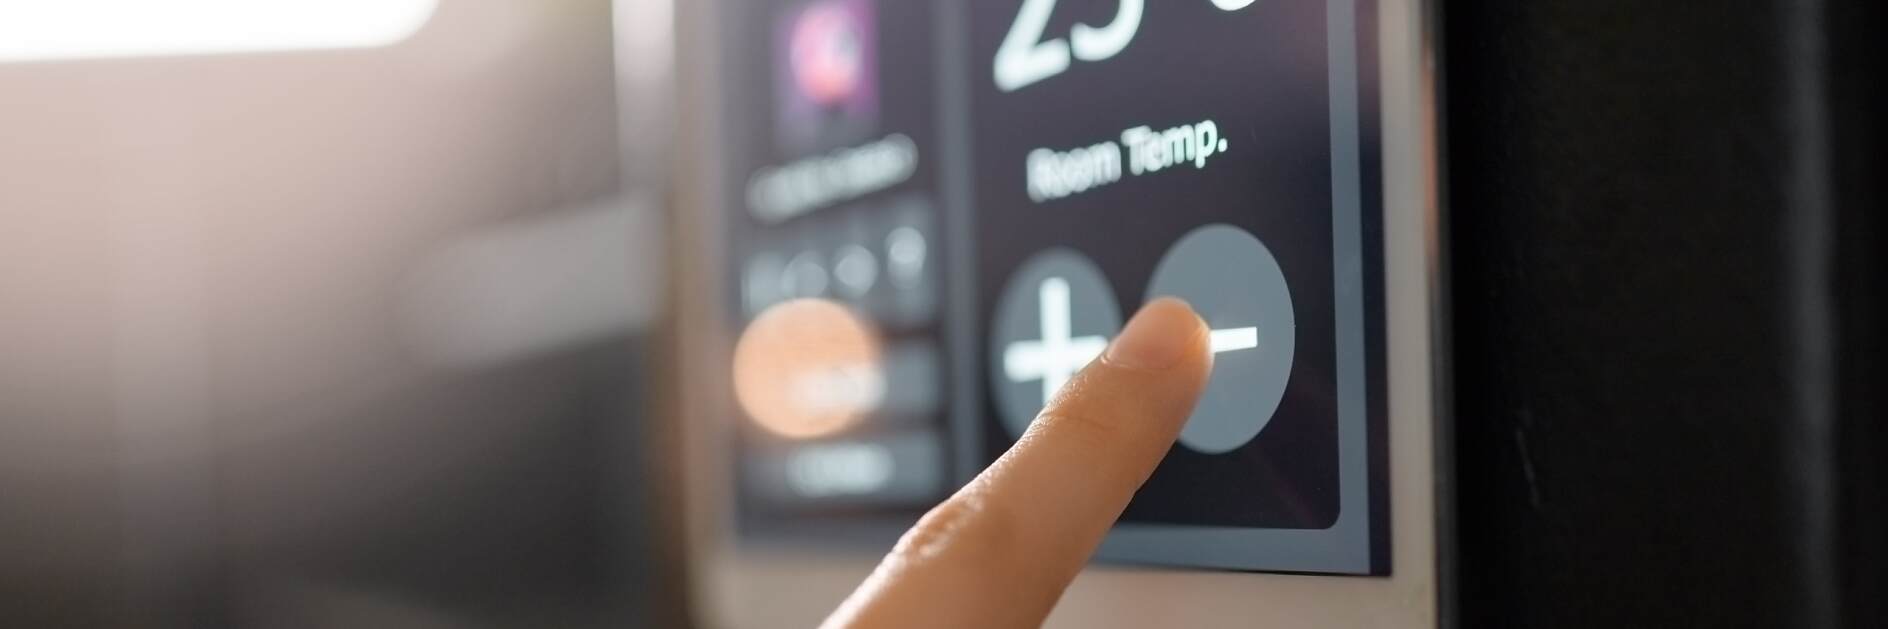 Smart home system, digital app monitor